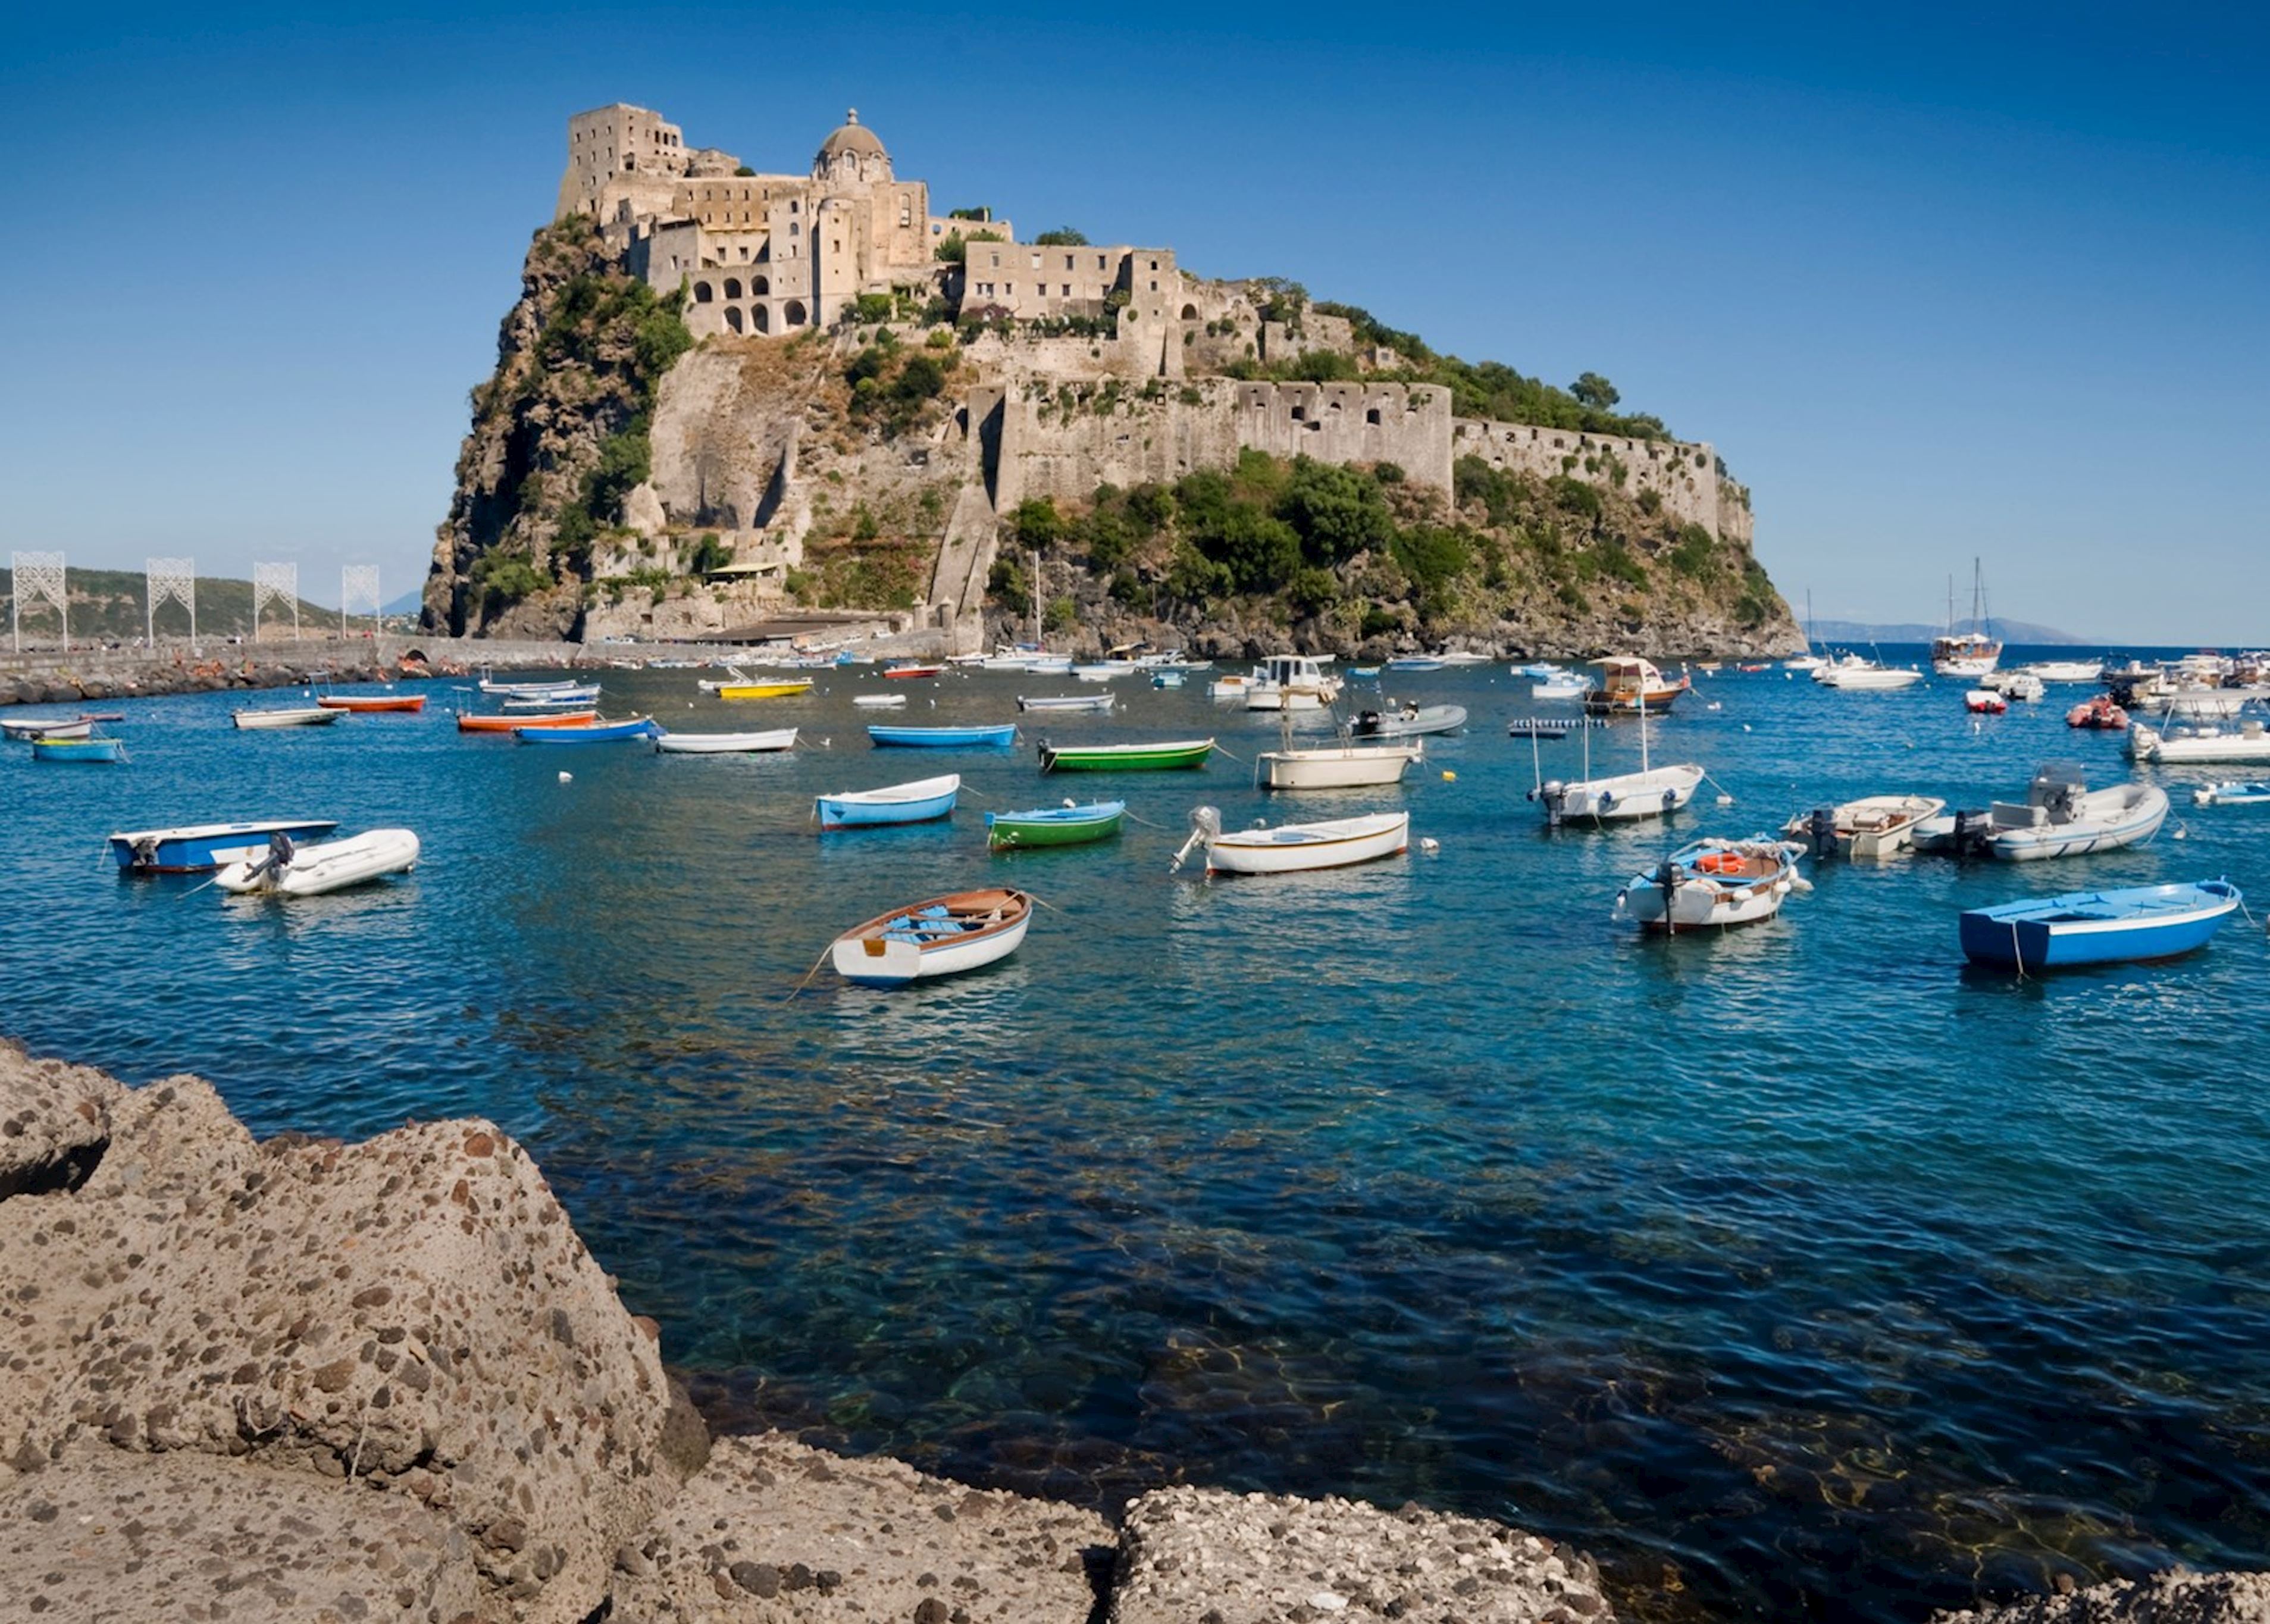 Ischia - Italian Open Water Tour